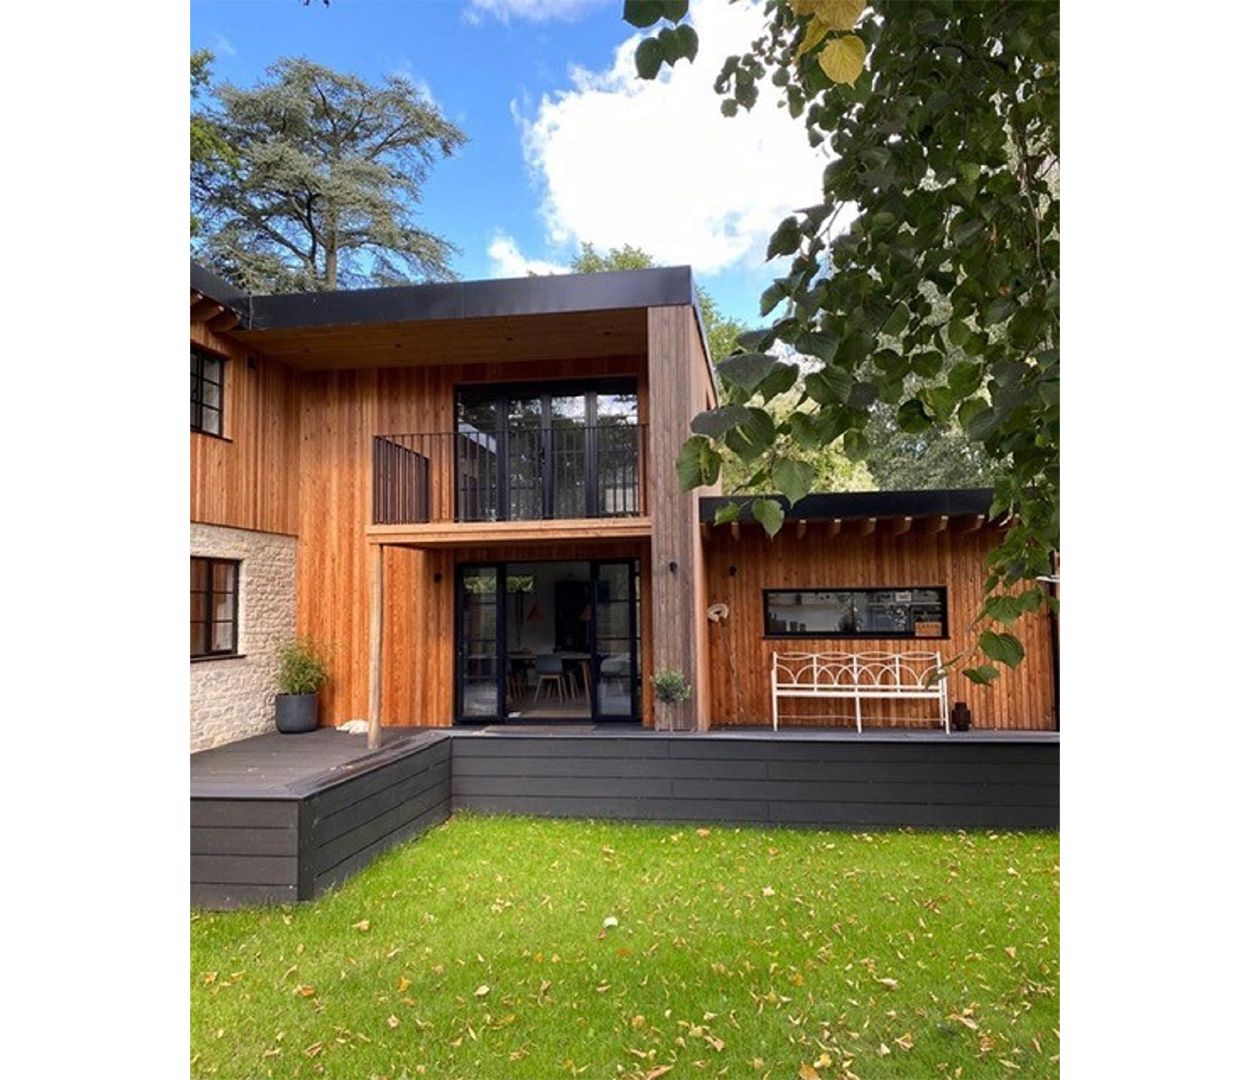 Nina Peths on Instagram has used Cladco Composite Woodgrain decking